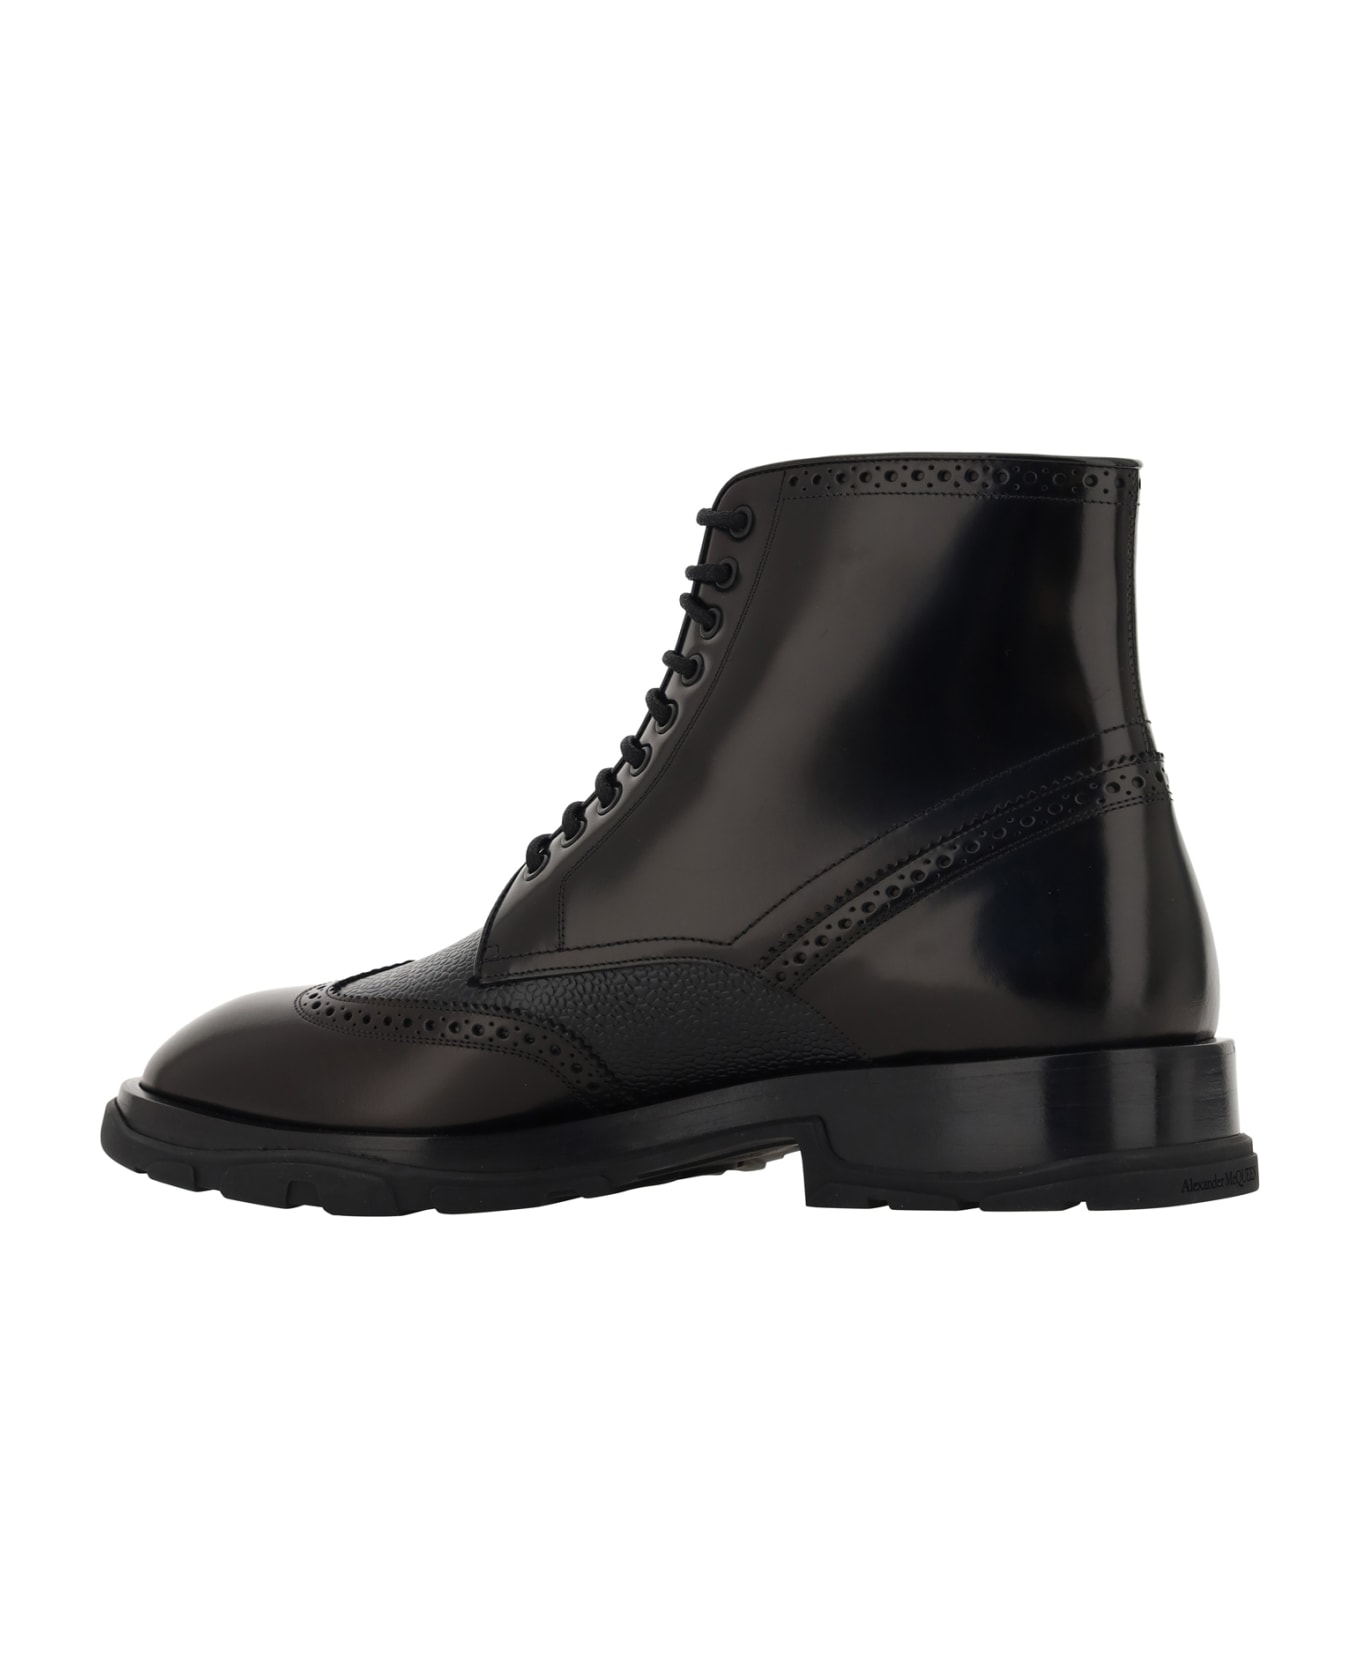 Alexander McQueen Lace Up Boots - Black/black/black ブーツ